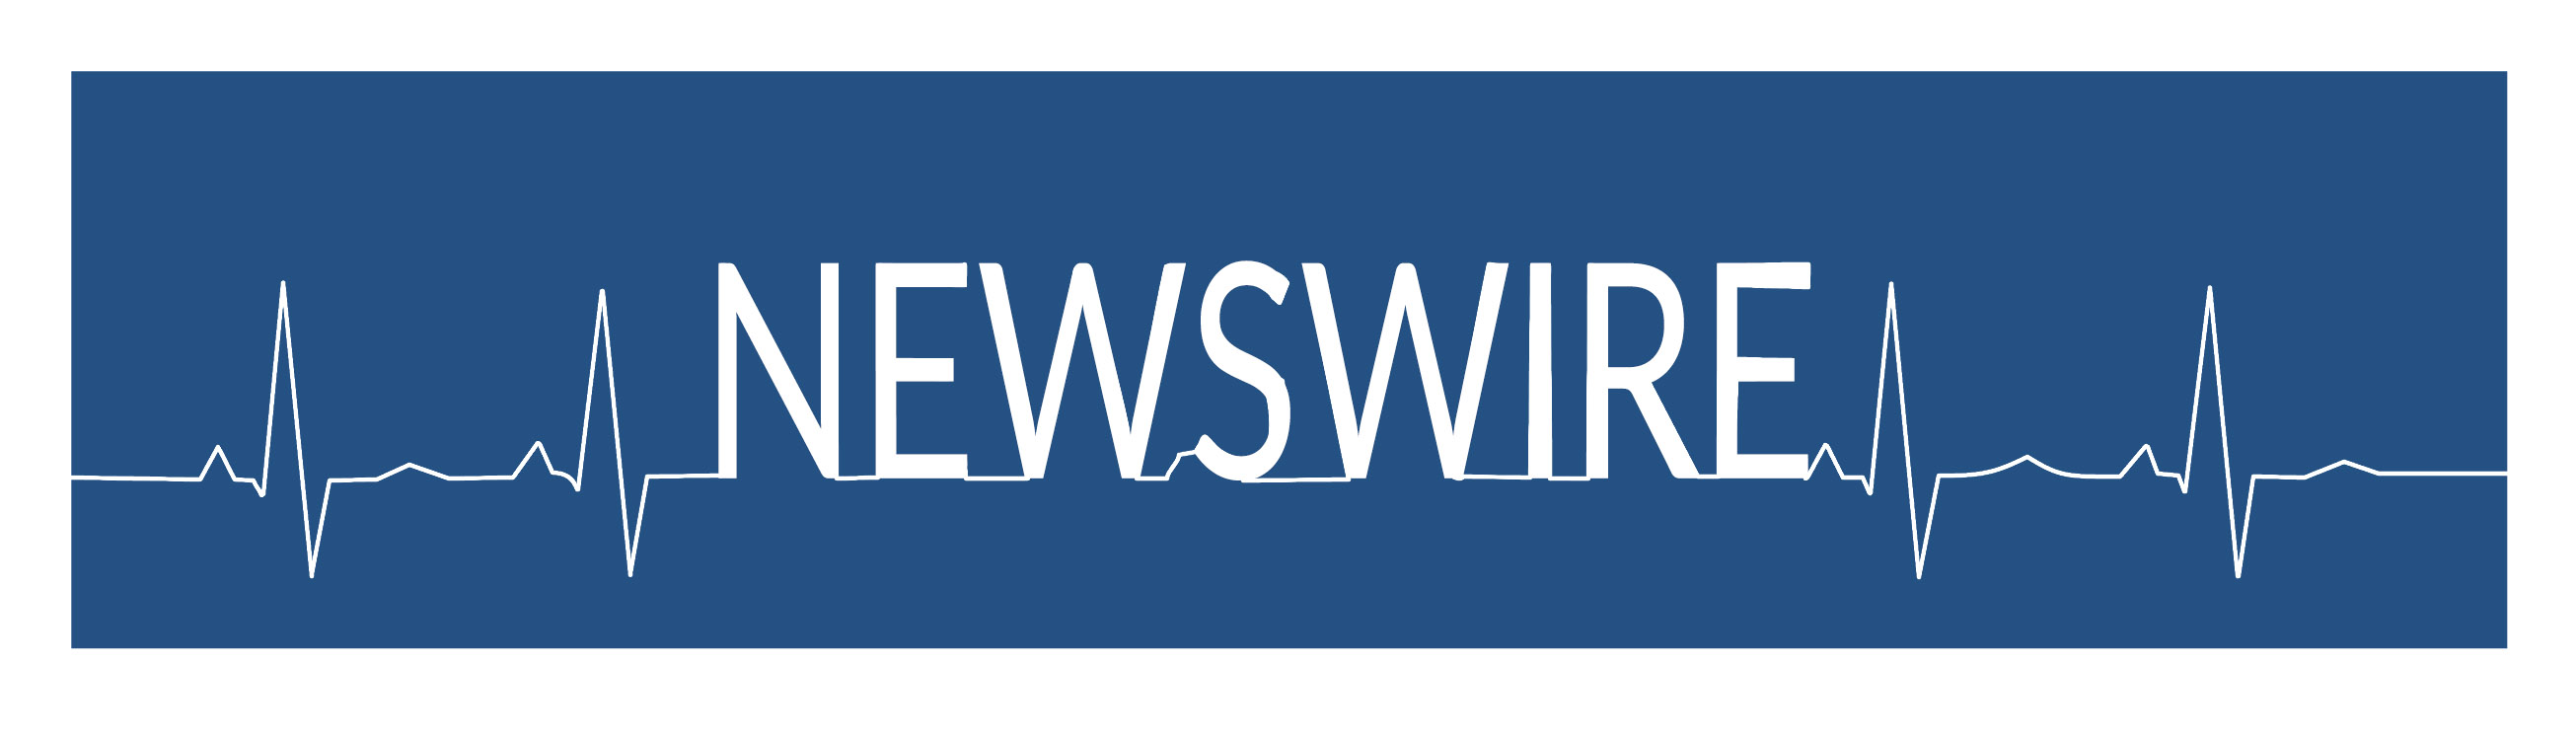 UA Newswire header